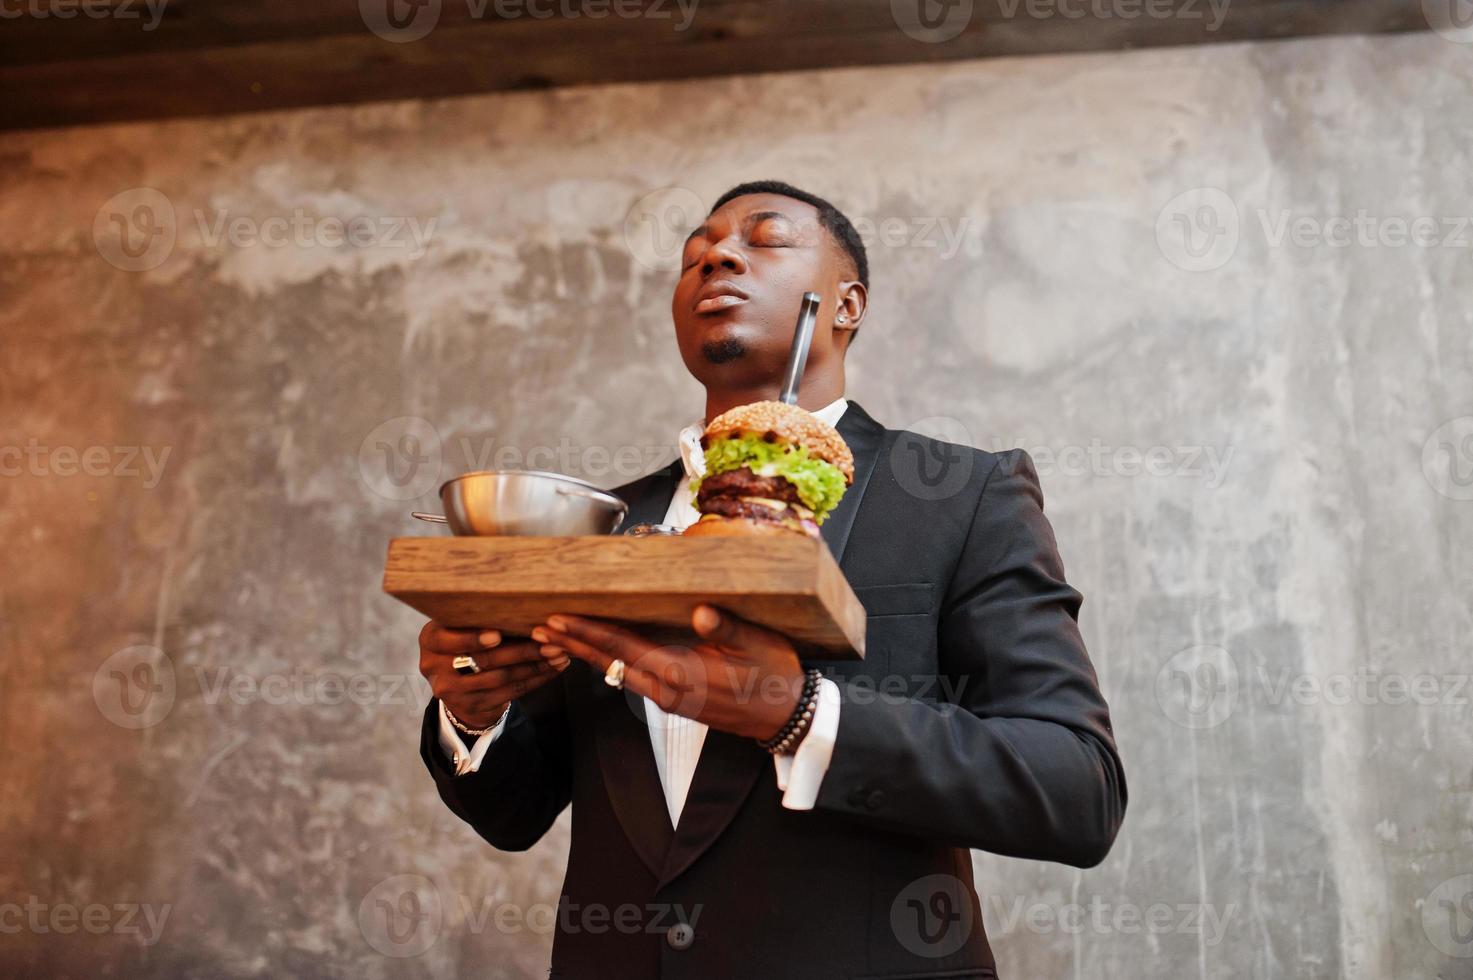 un joven afroamericano respetable con traje negro sostiene una bandeja con una hamburguesa doble contra una pared gris. respira olor a deliciosa hamburguesa. foto